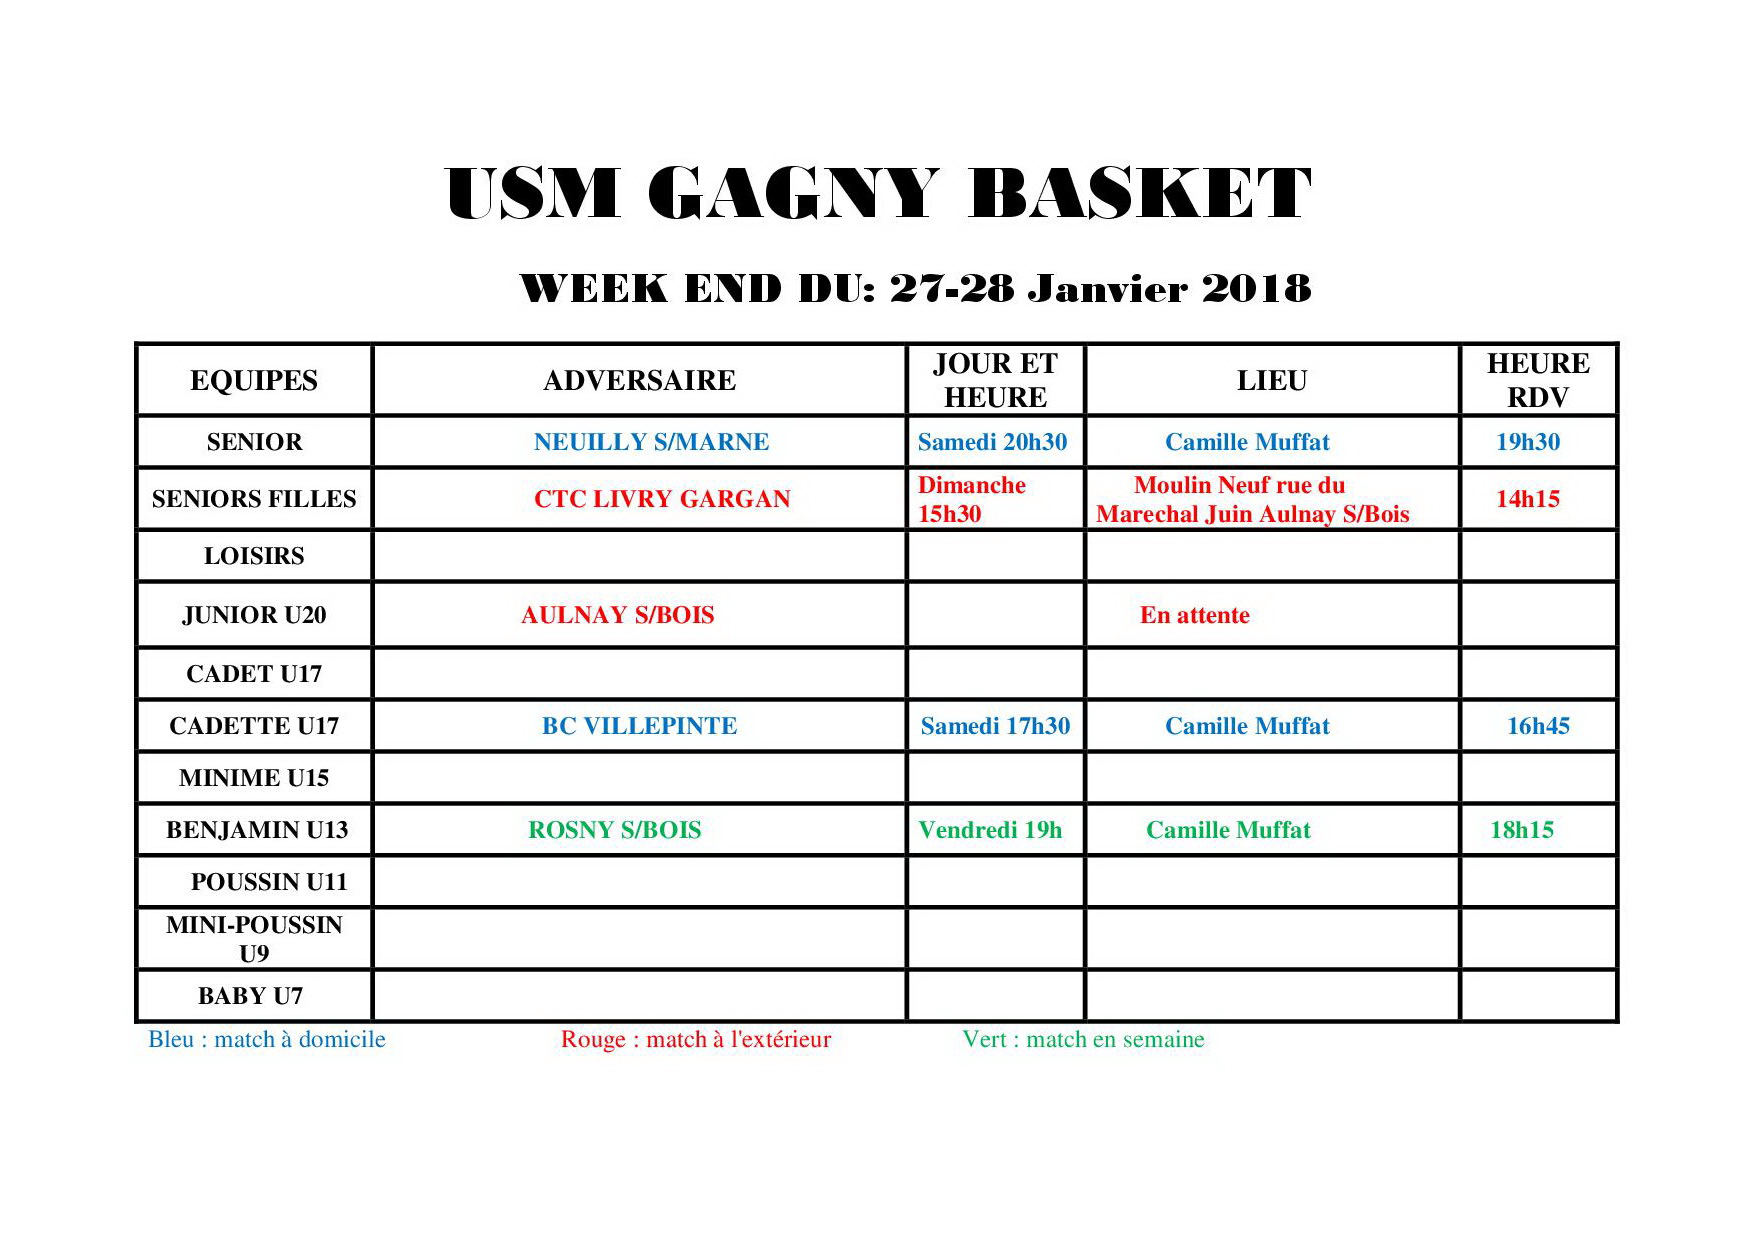 Usmg gagny planning week end 27 28 janvier 2018